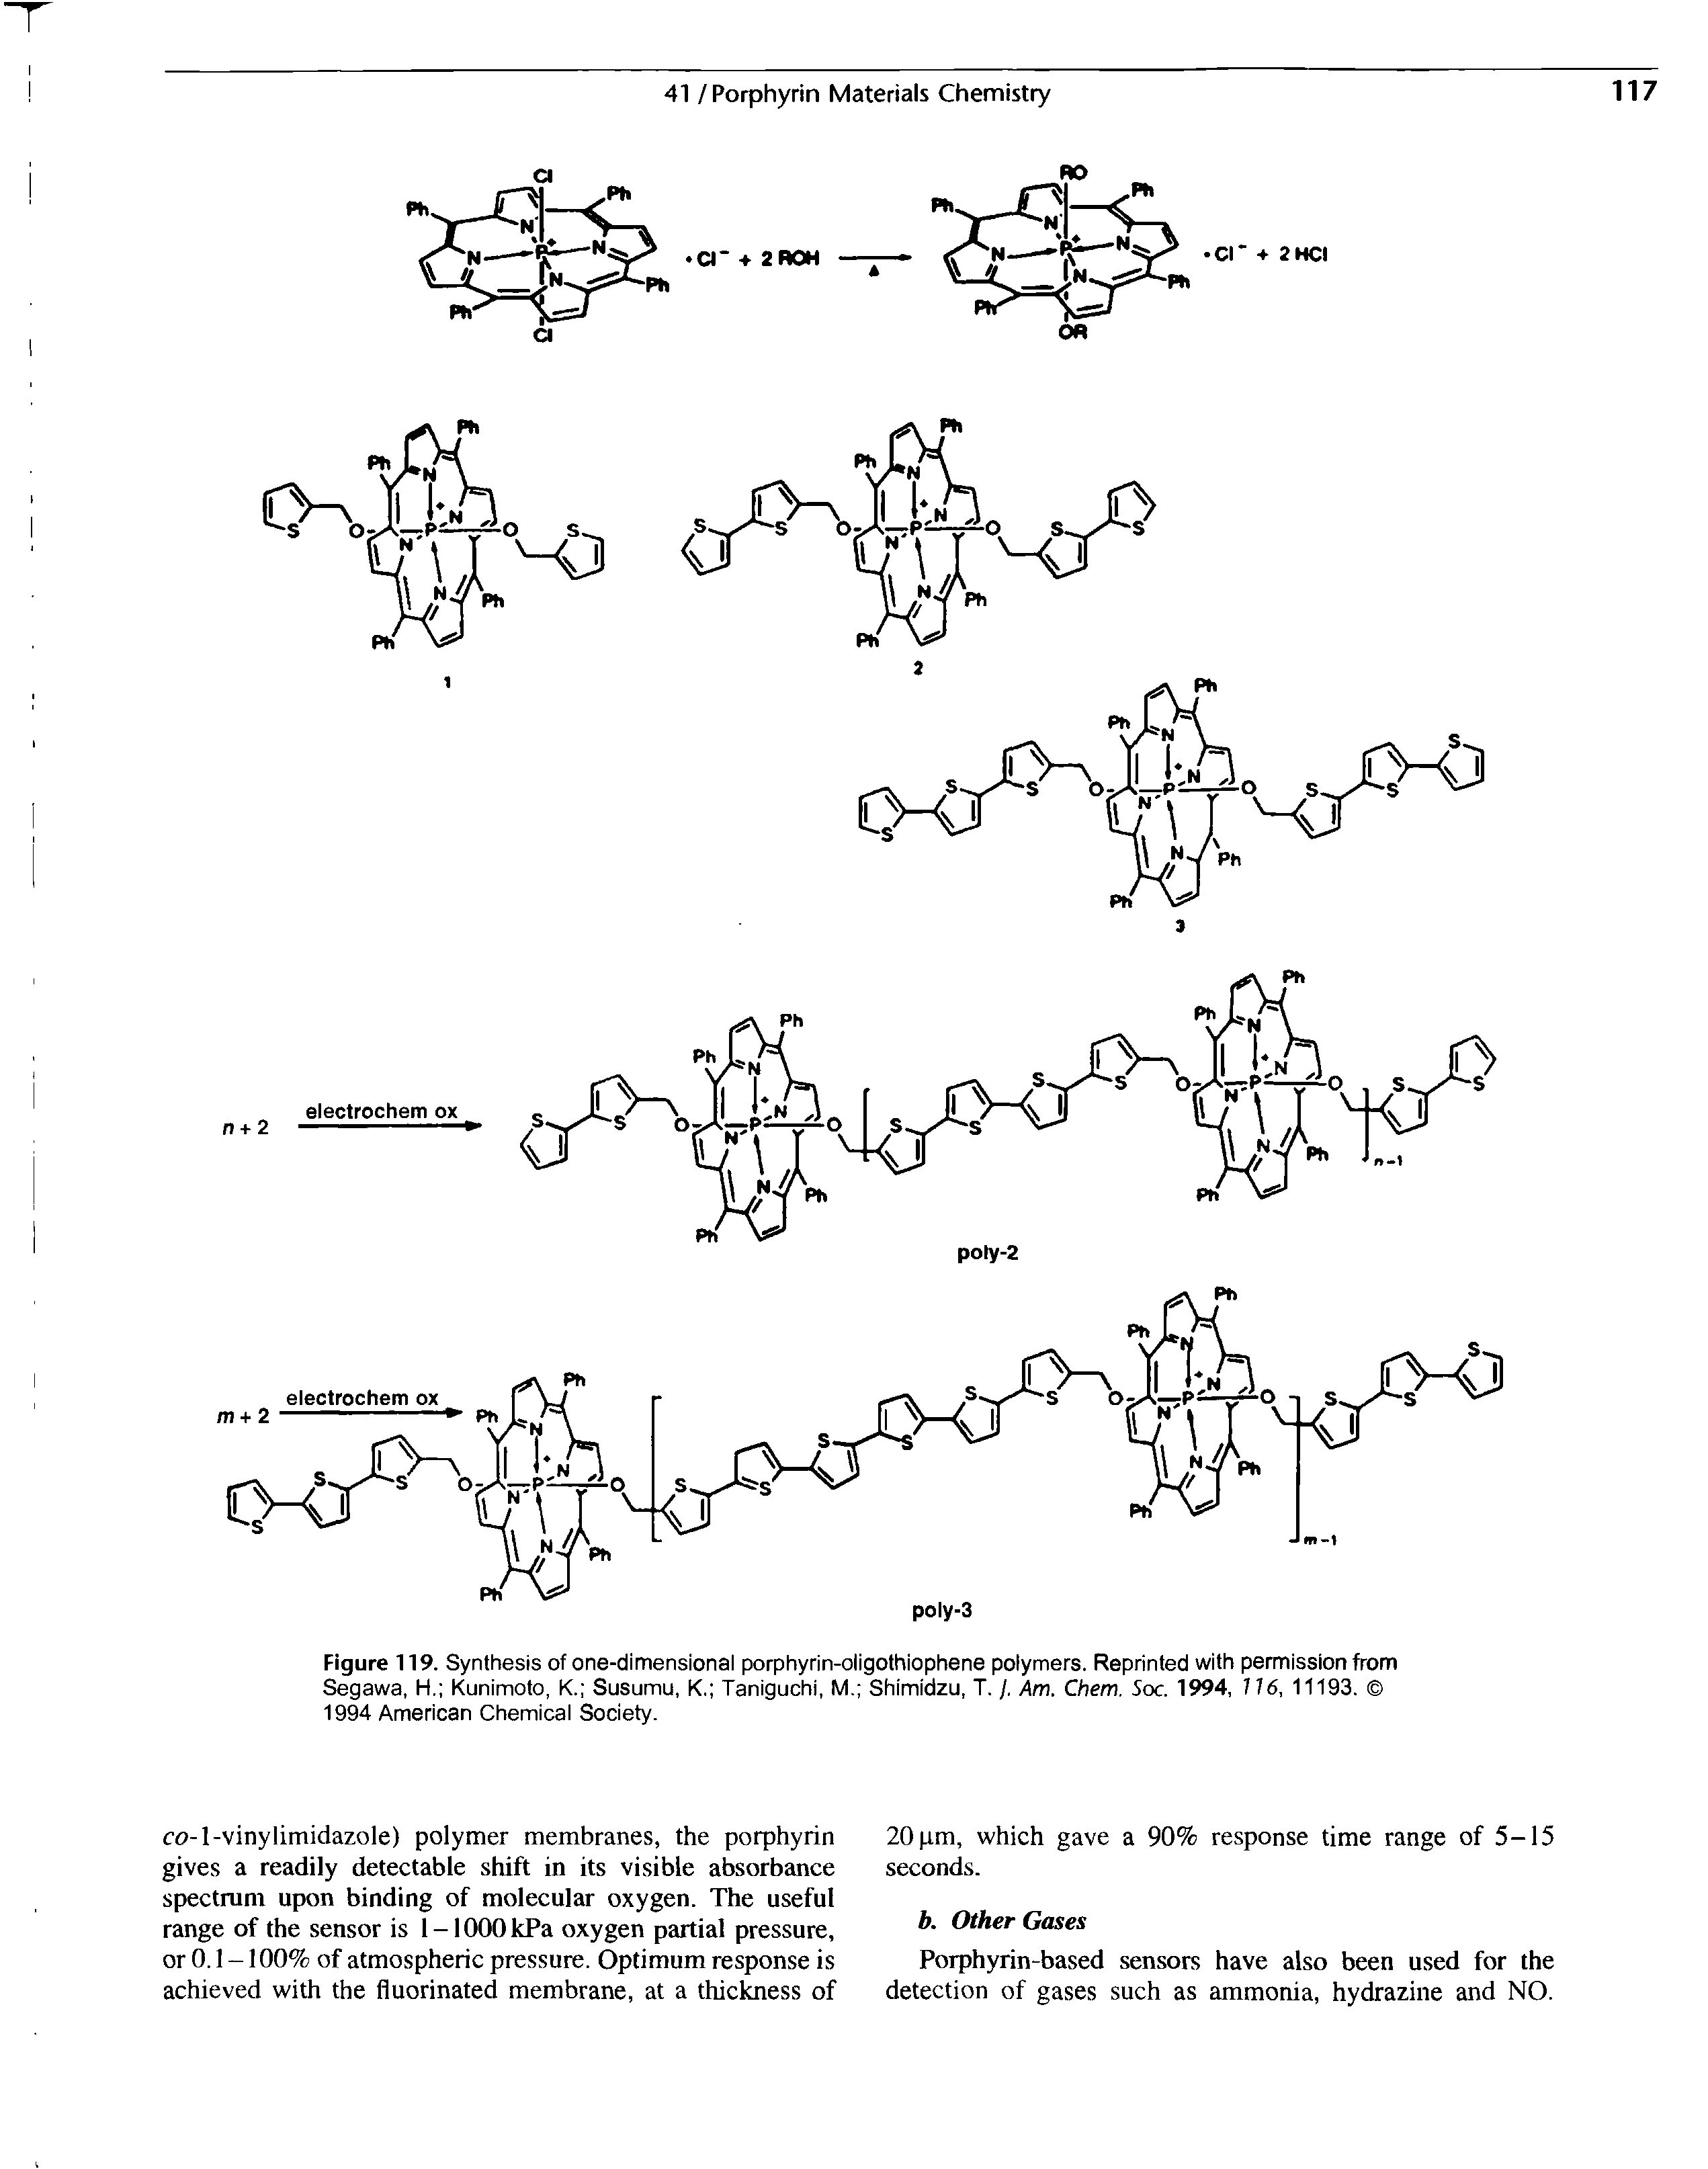 Figure 119. Synthesis of one-dimensional porphyrin-oligothiophene polymers. Reprinted with permission from Segawa, H. Kunimoto, K. Susumu, K. Taniguchi, M, Shimidzu, T. /. Am. Chem. Soc. 1994, 116, 11193. 1994 American Chemical Society.